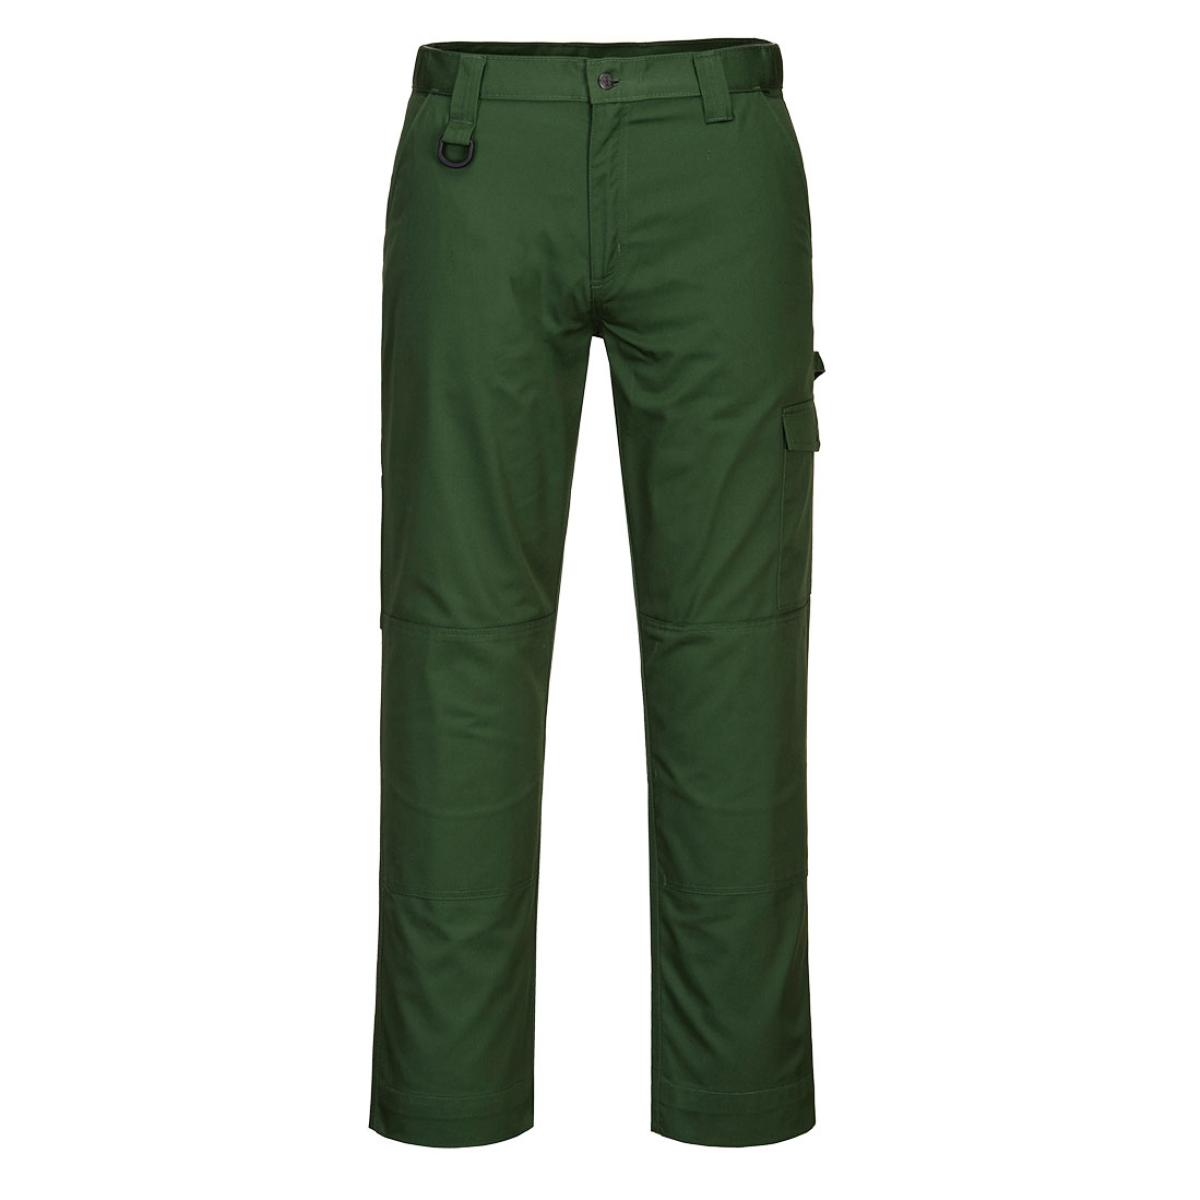 Smarty Pants women's cotton lycra bell bottom bottle green formal trouser